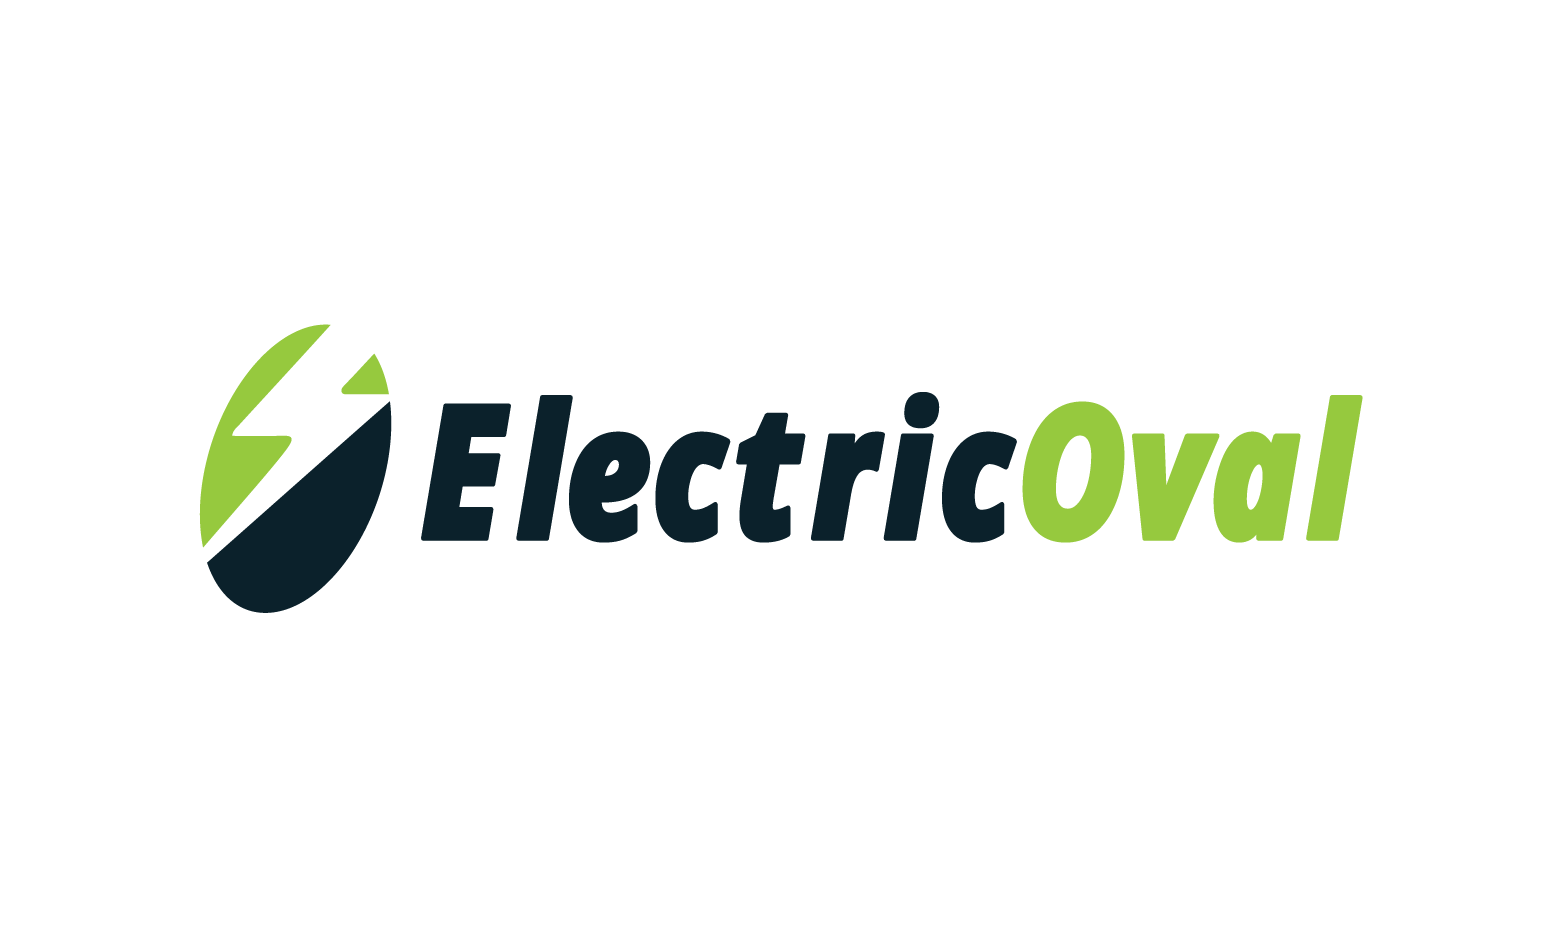 ElectricOval.com - Creative brandable domain for sale